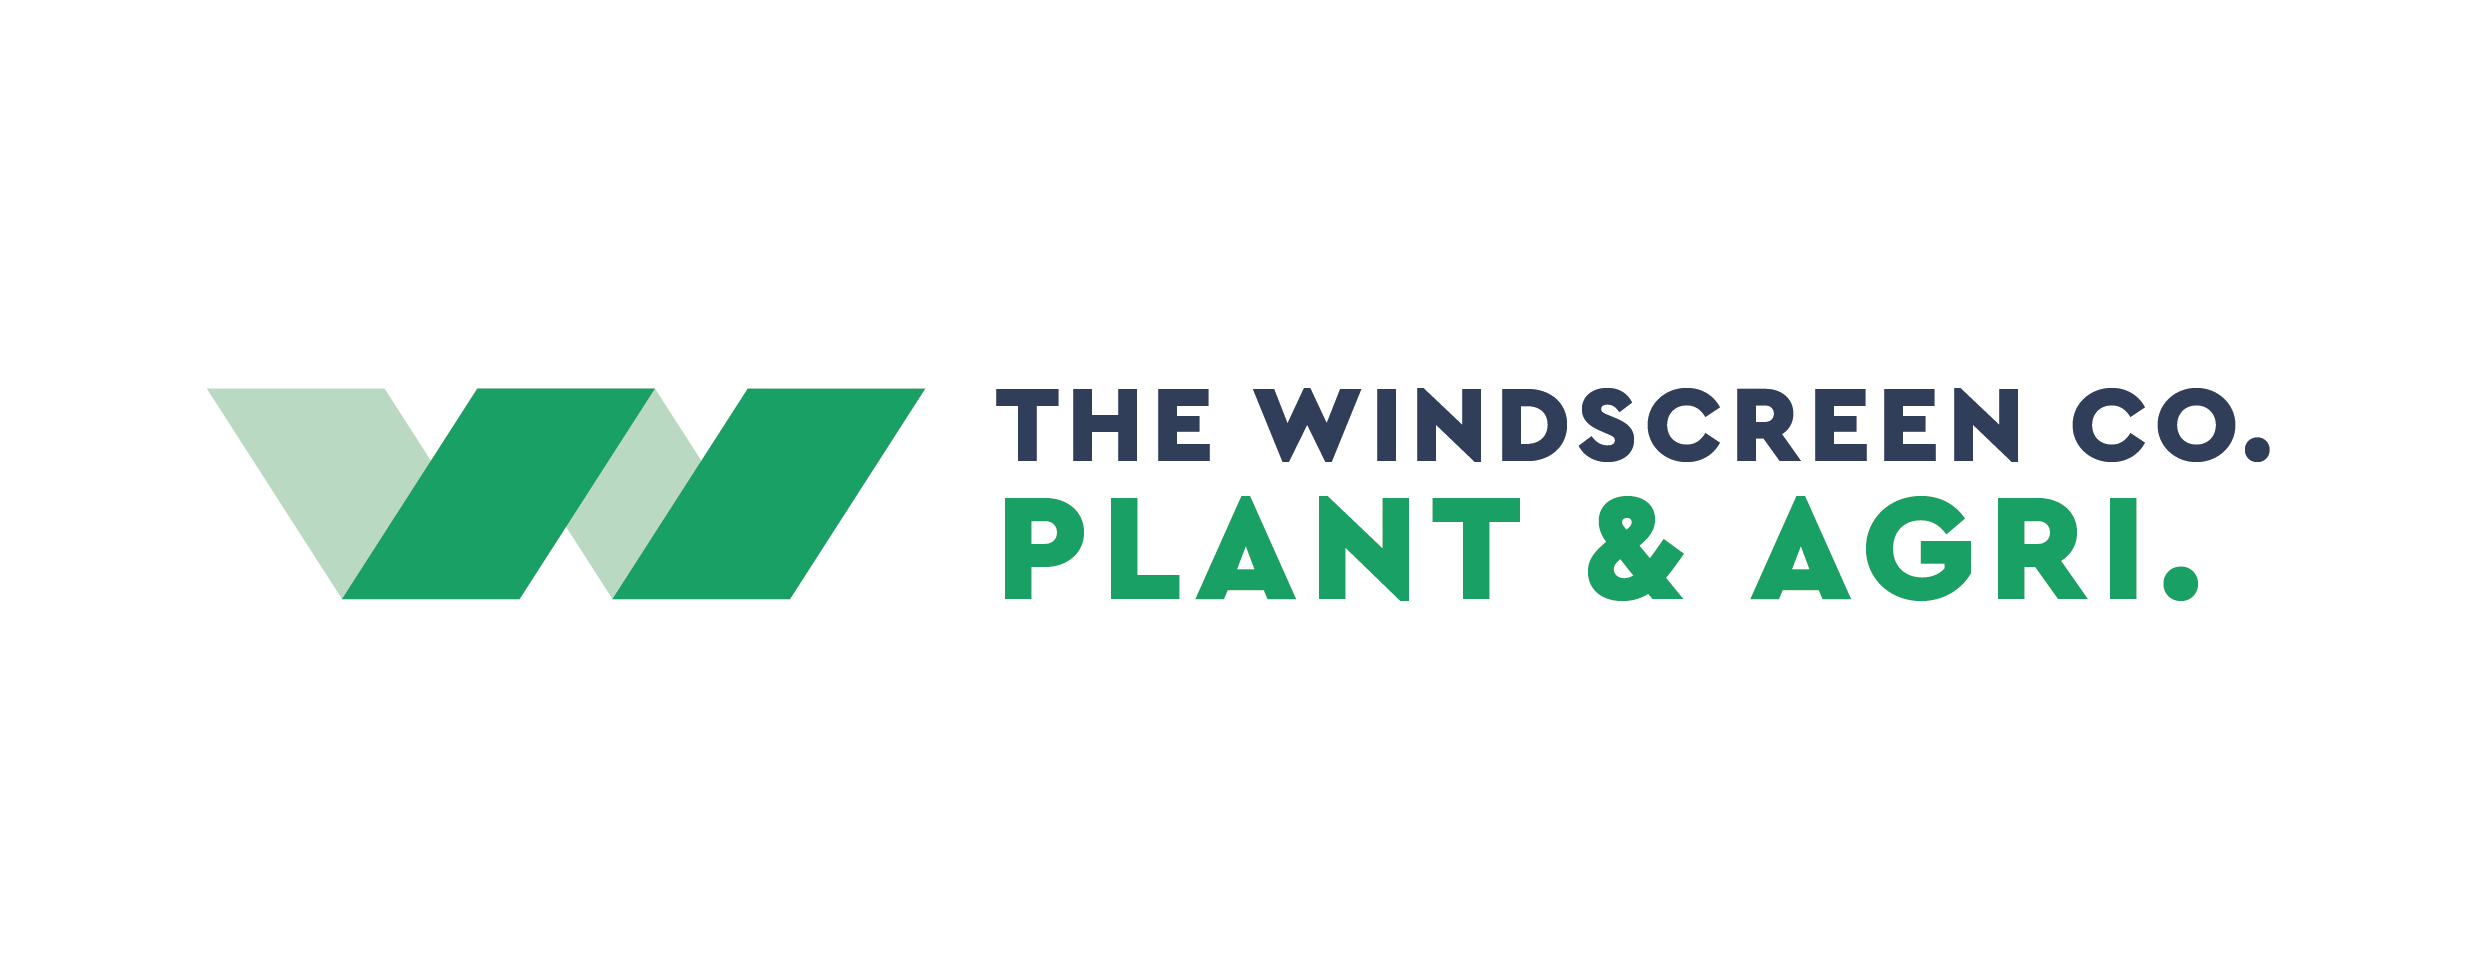 TWC Plant & Agri New Logo